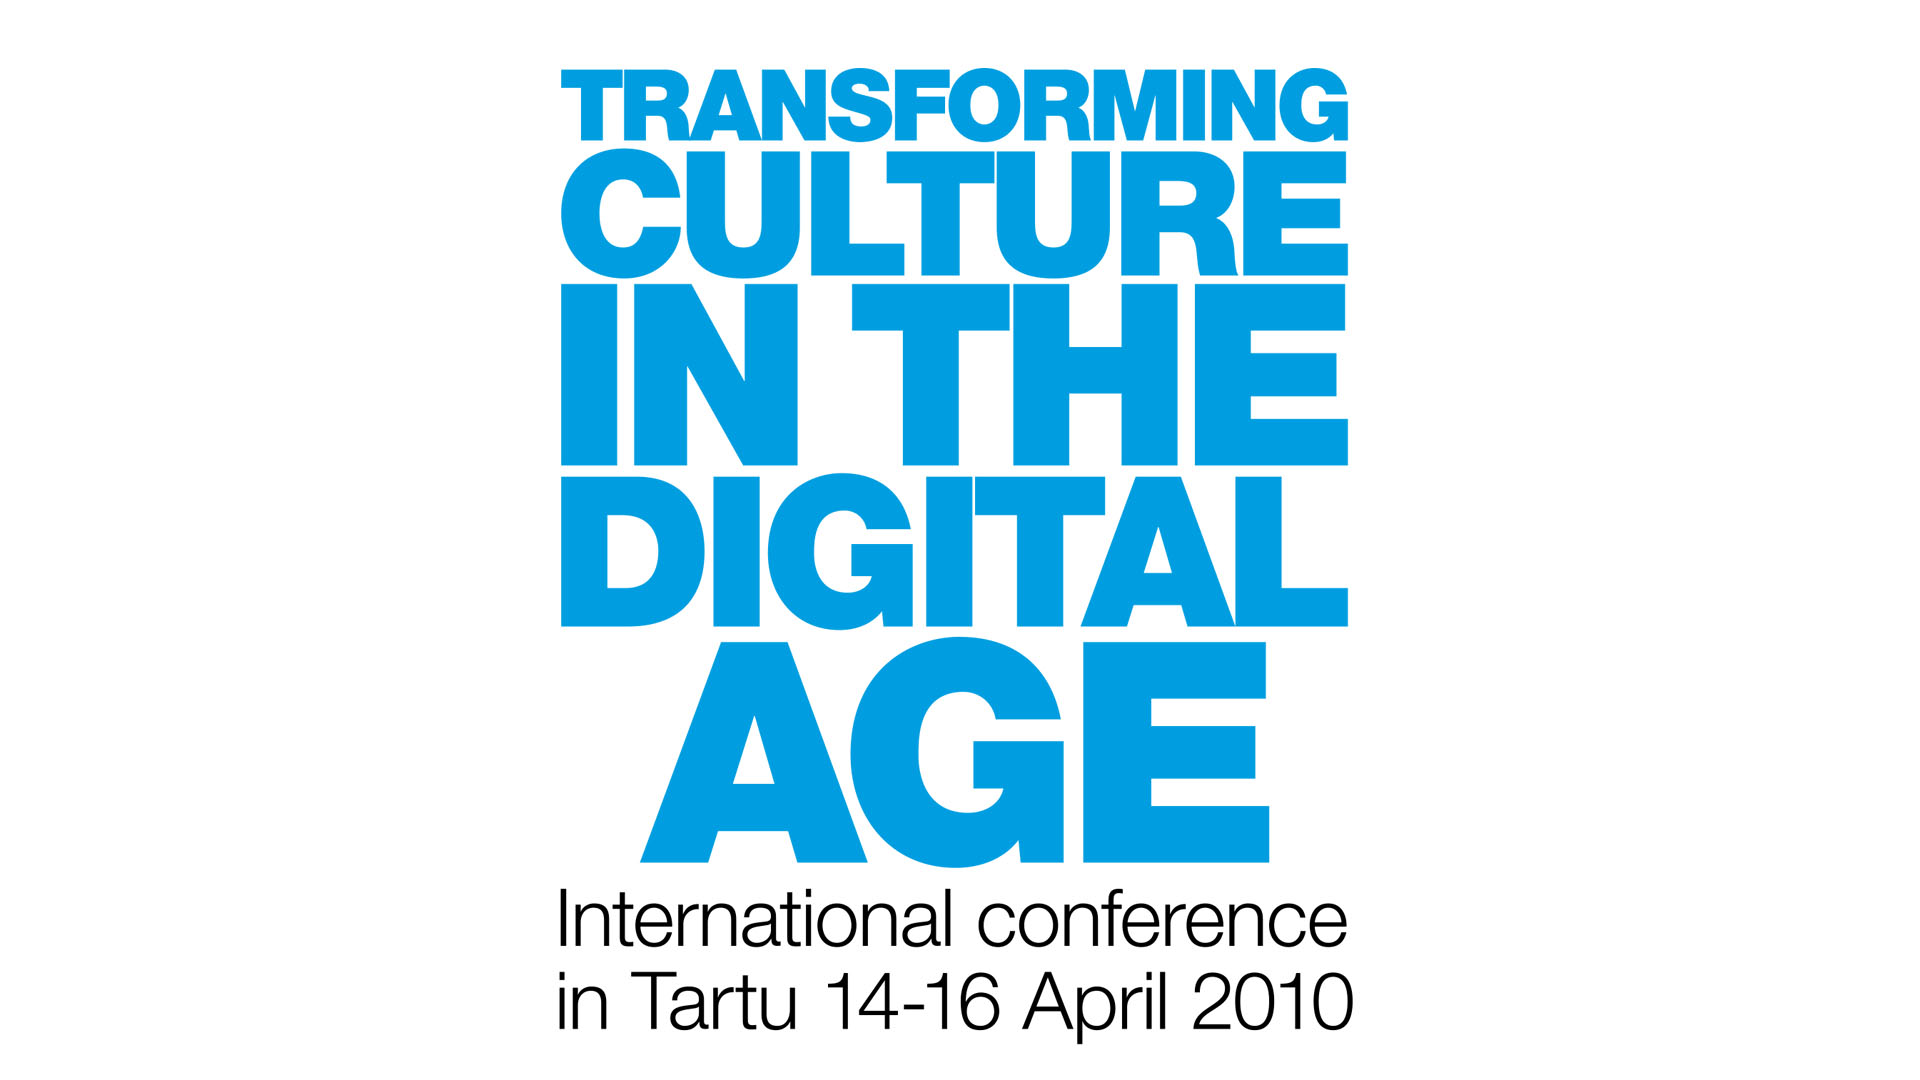 “Transforming Culture in the Digital Age” international conference in Estonia